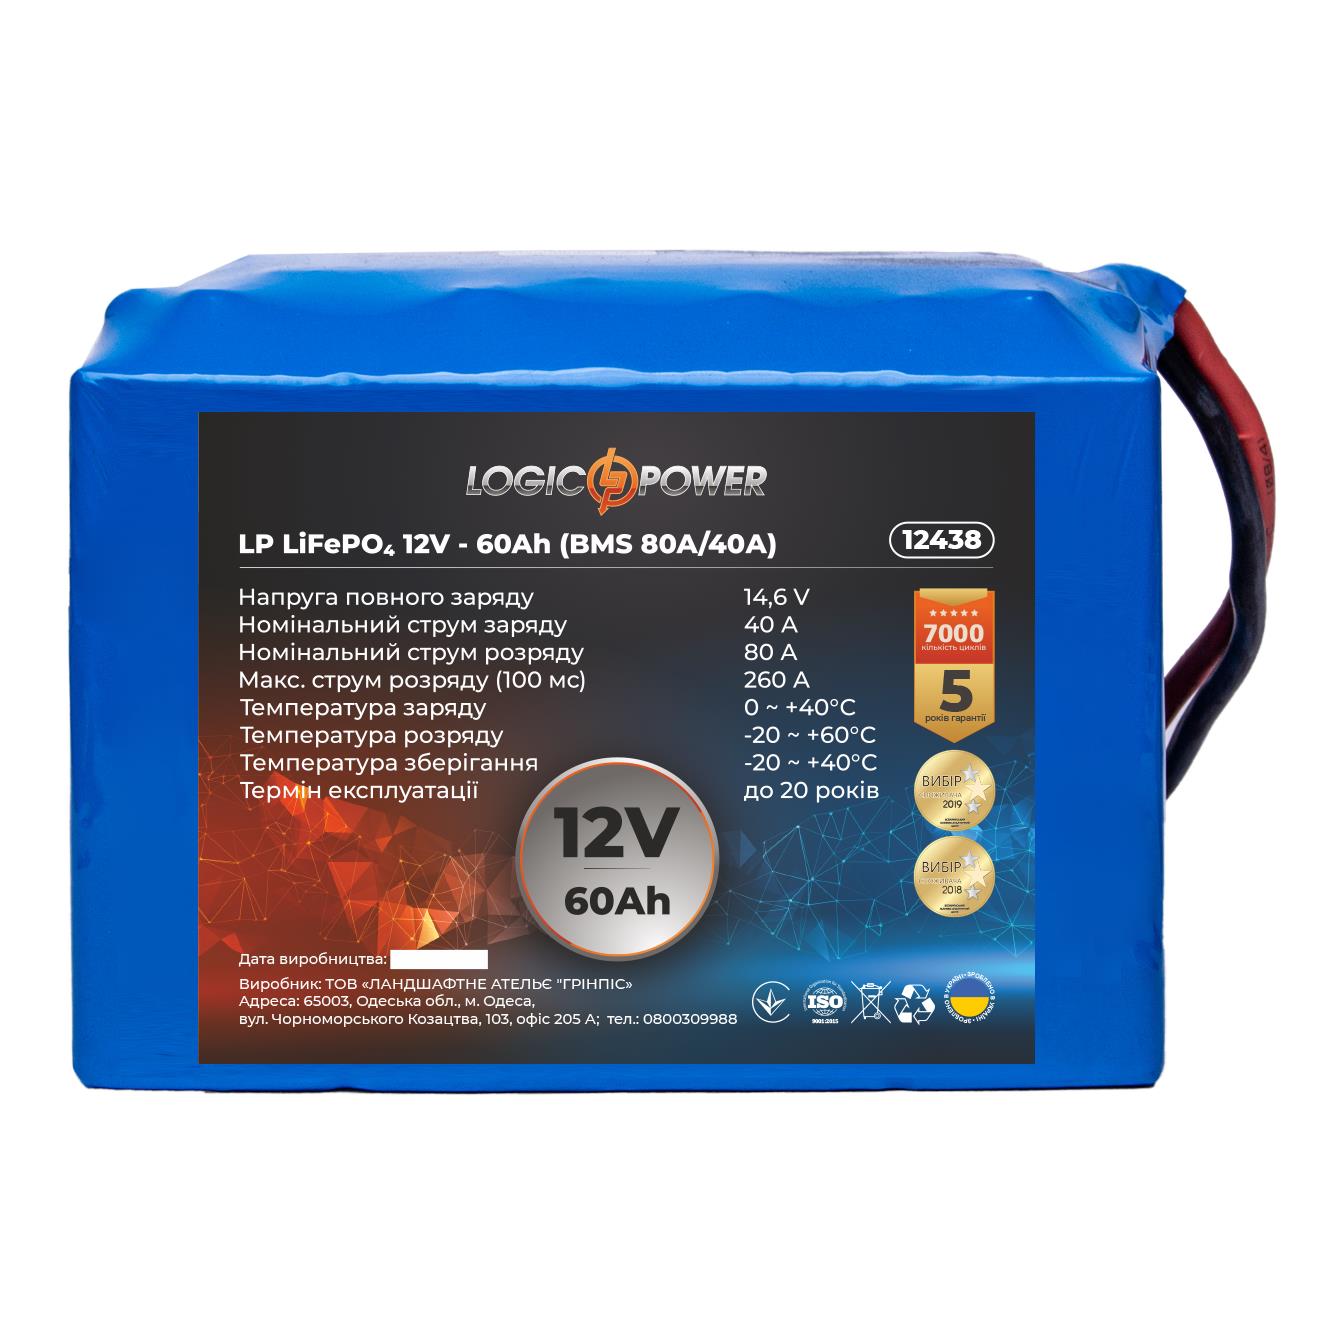 Аккумулятор литий-железо-фосфатный LogicPower LP LiFePO4 12V - 60 Ah (BMS 80A/40А) (12438)